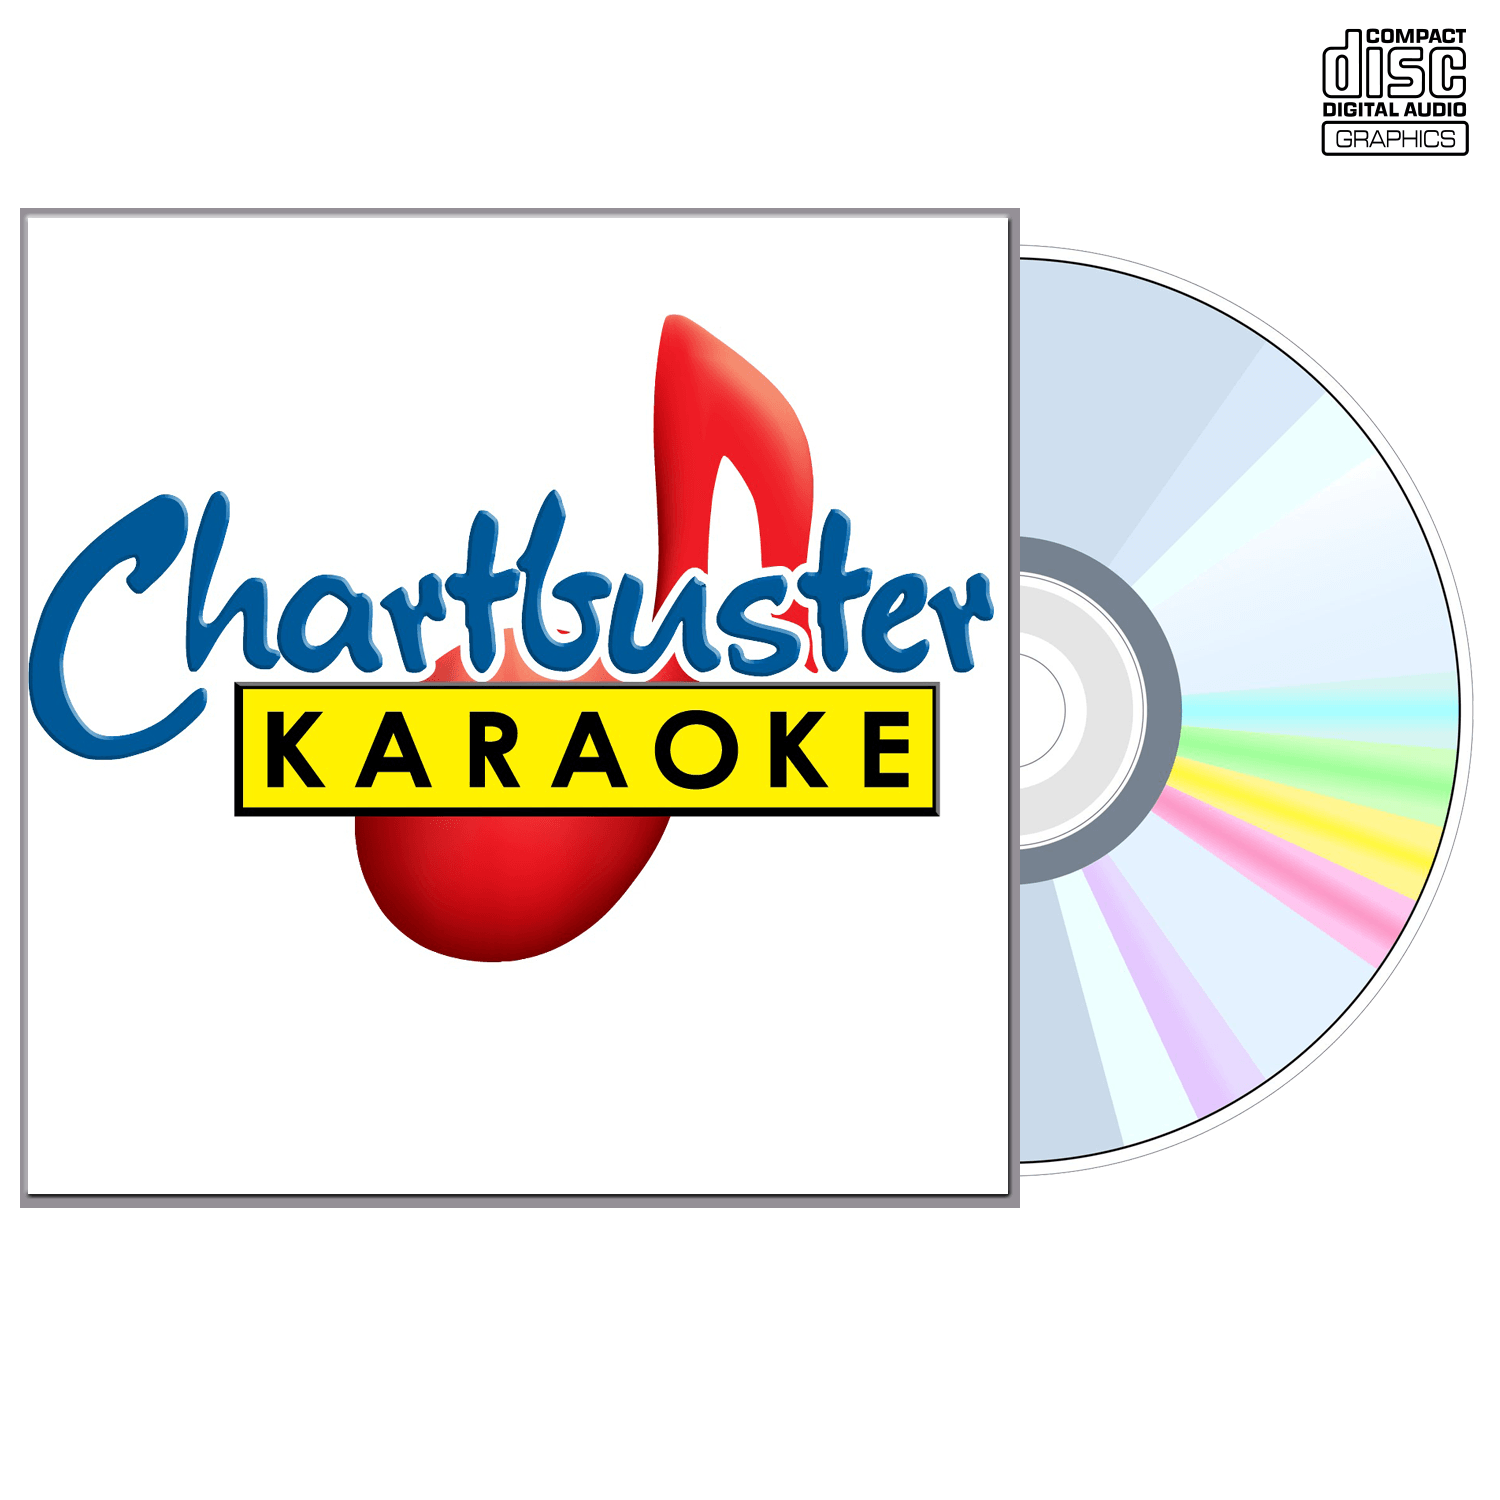 Best Of Foo Fighters - CD+G - Chartbuster Karaoke - Karaoke Home Entertainment